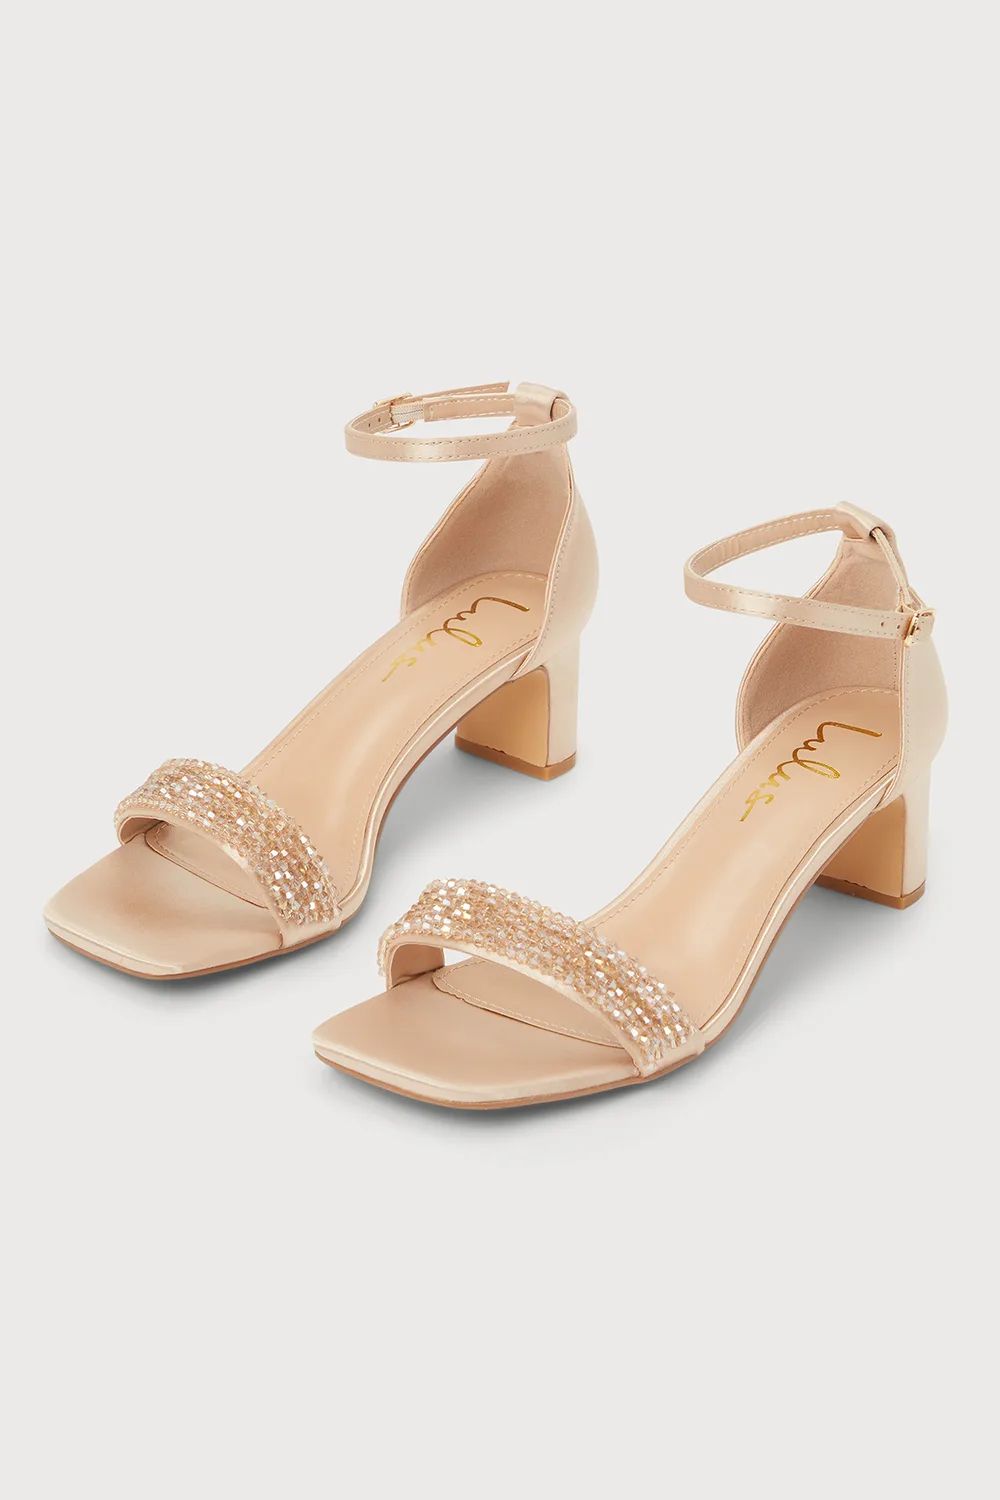 Kainda Champagne Satin Beaded Ankle Strap Heels | Lulus (US)